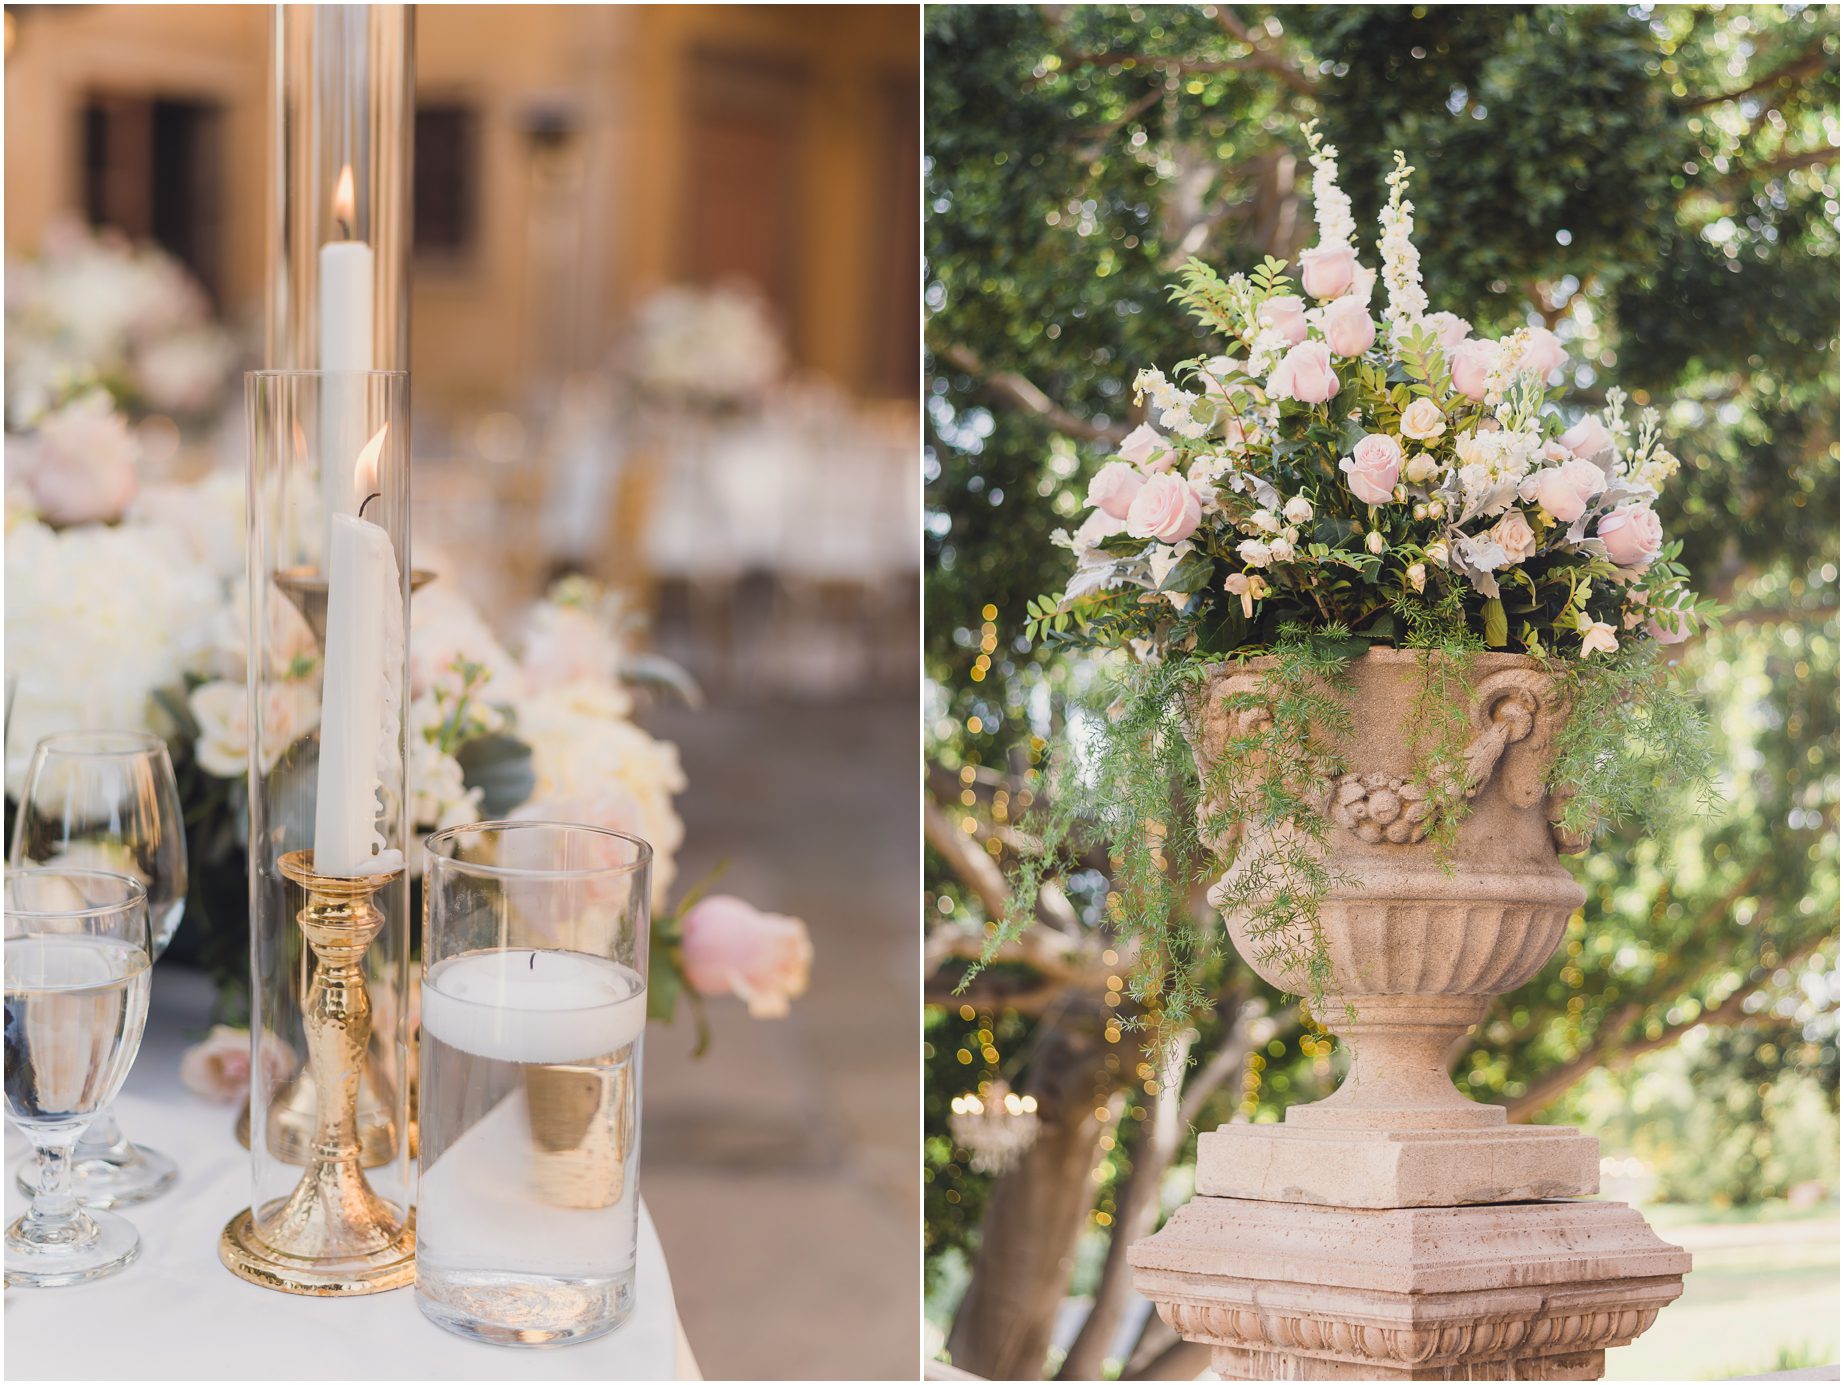 Wedding details: a cake, keys, and an invitation at a table at Villa del sol d'Oro